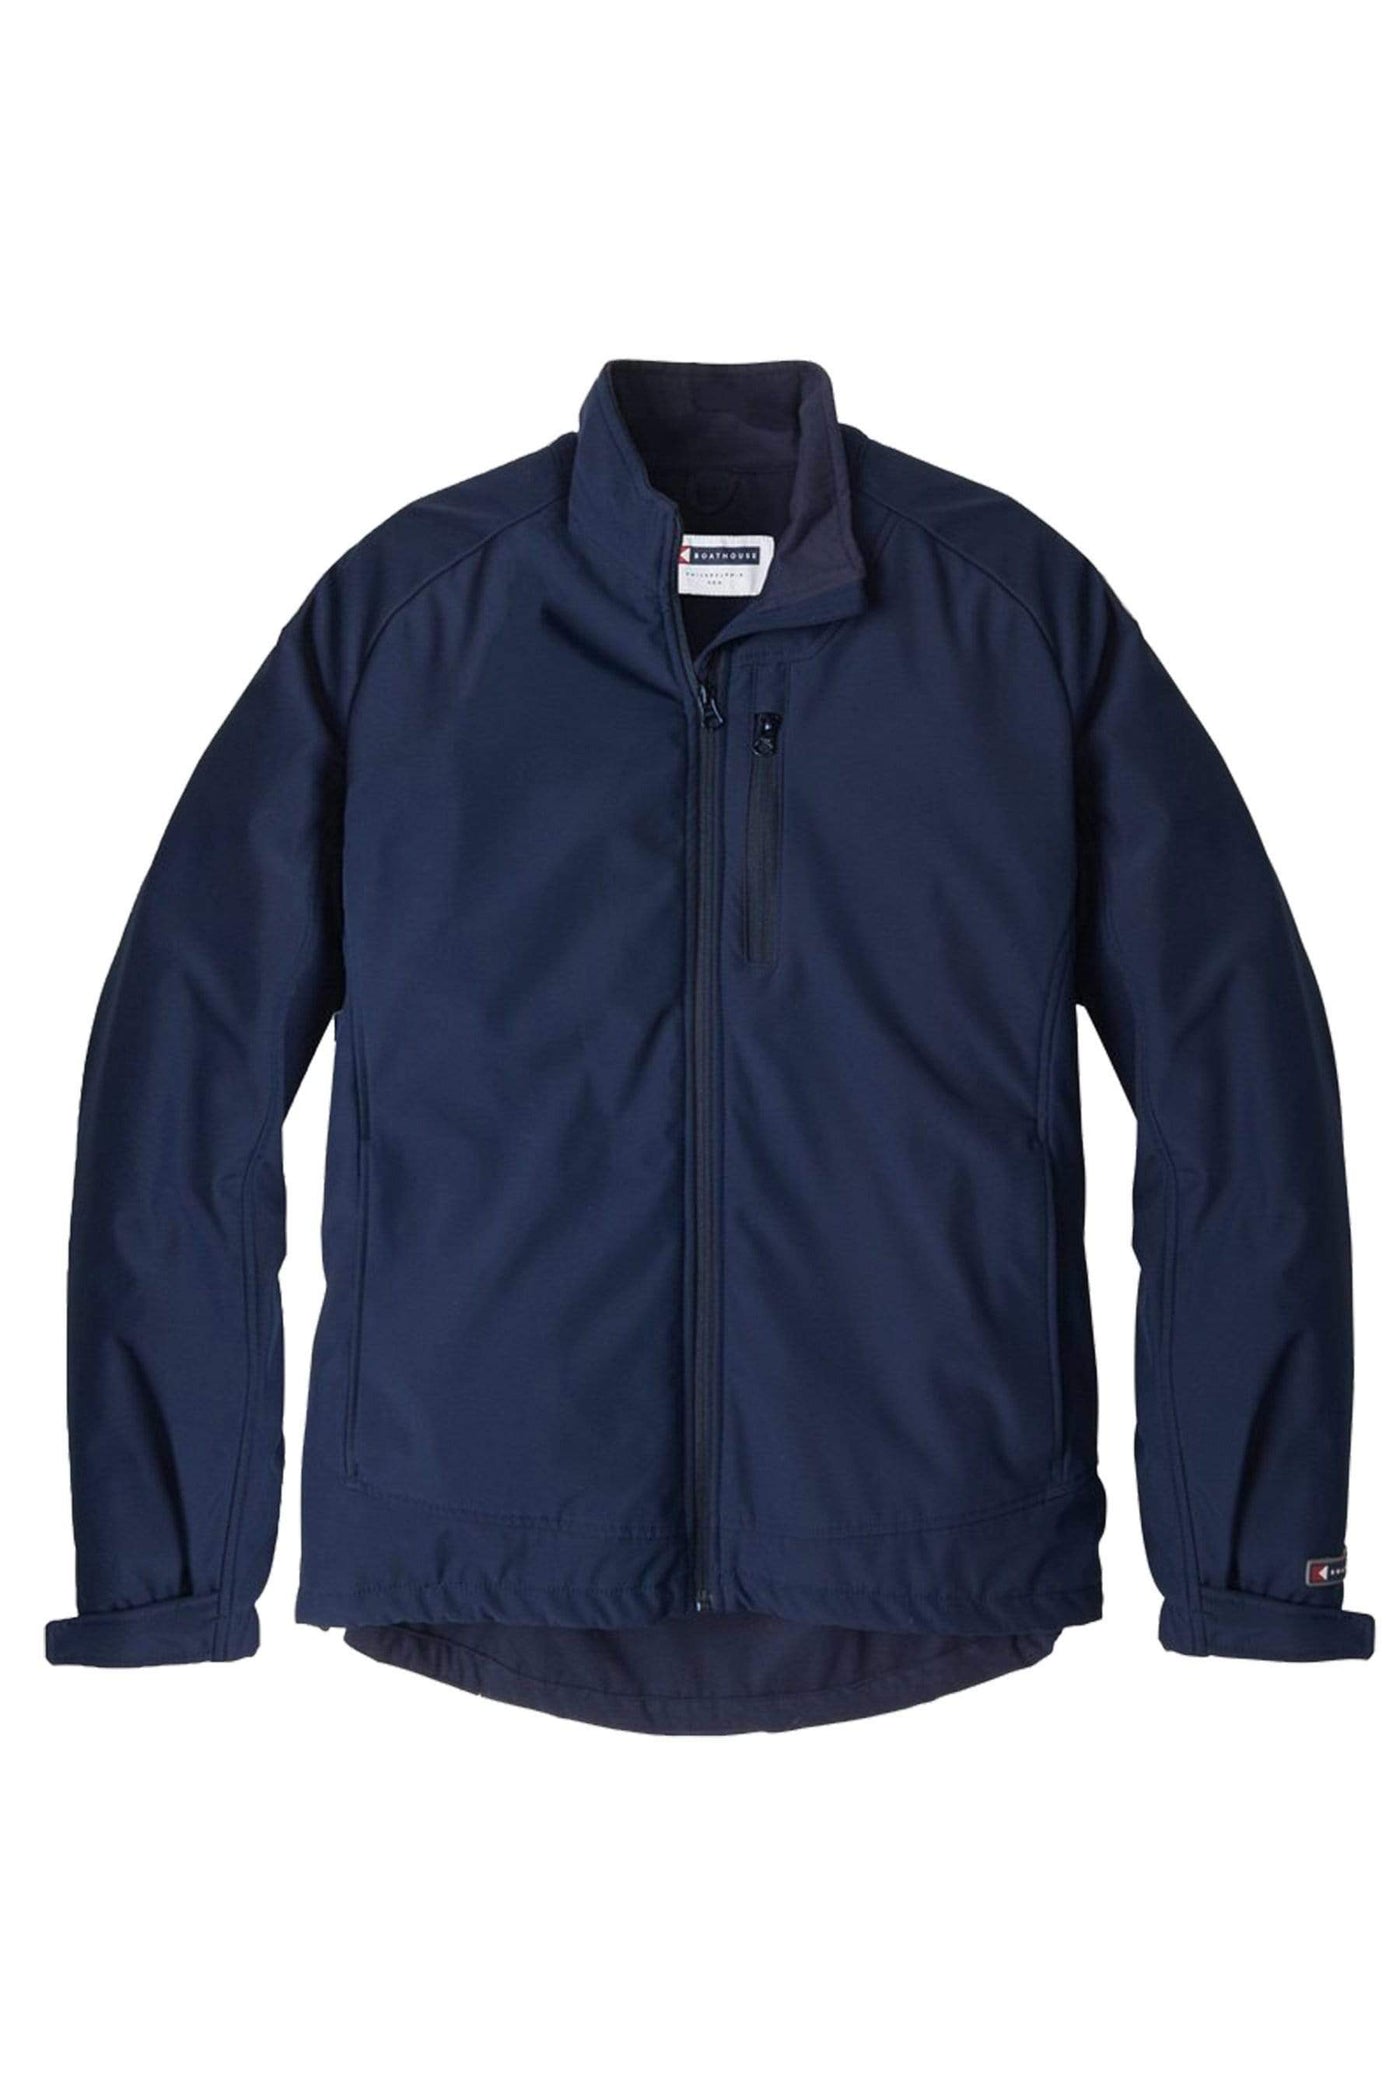 Men's Equinox Soft Shell Jacket | Boathouse Sports